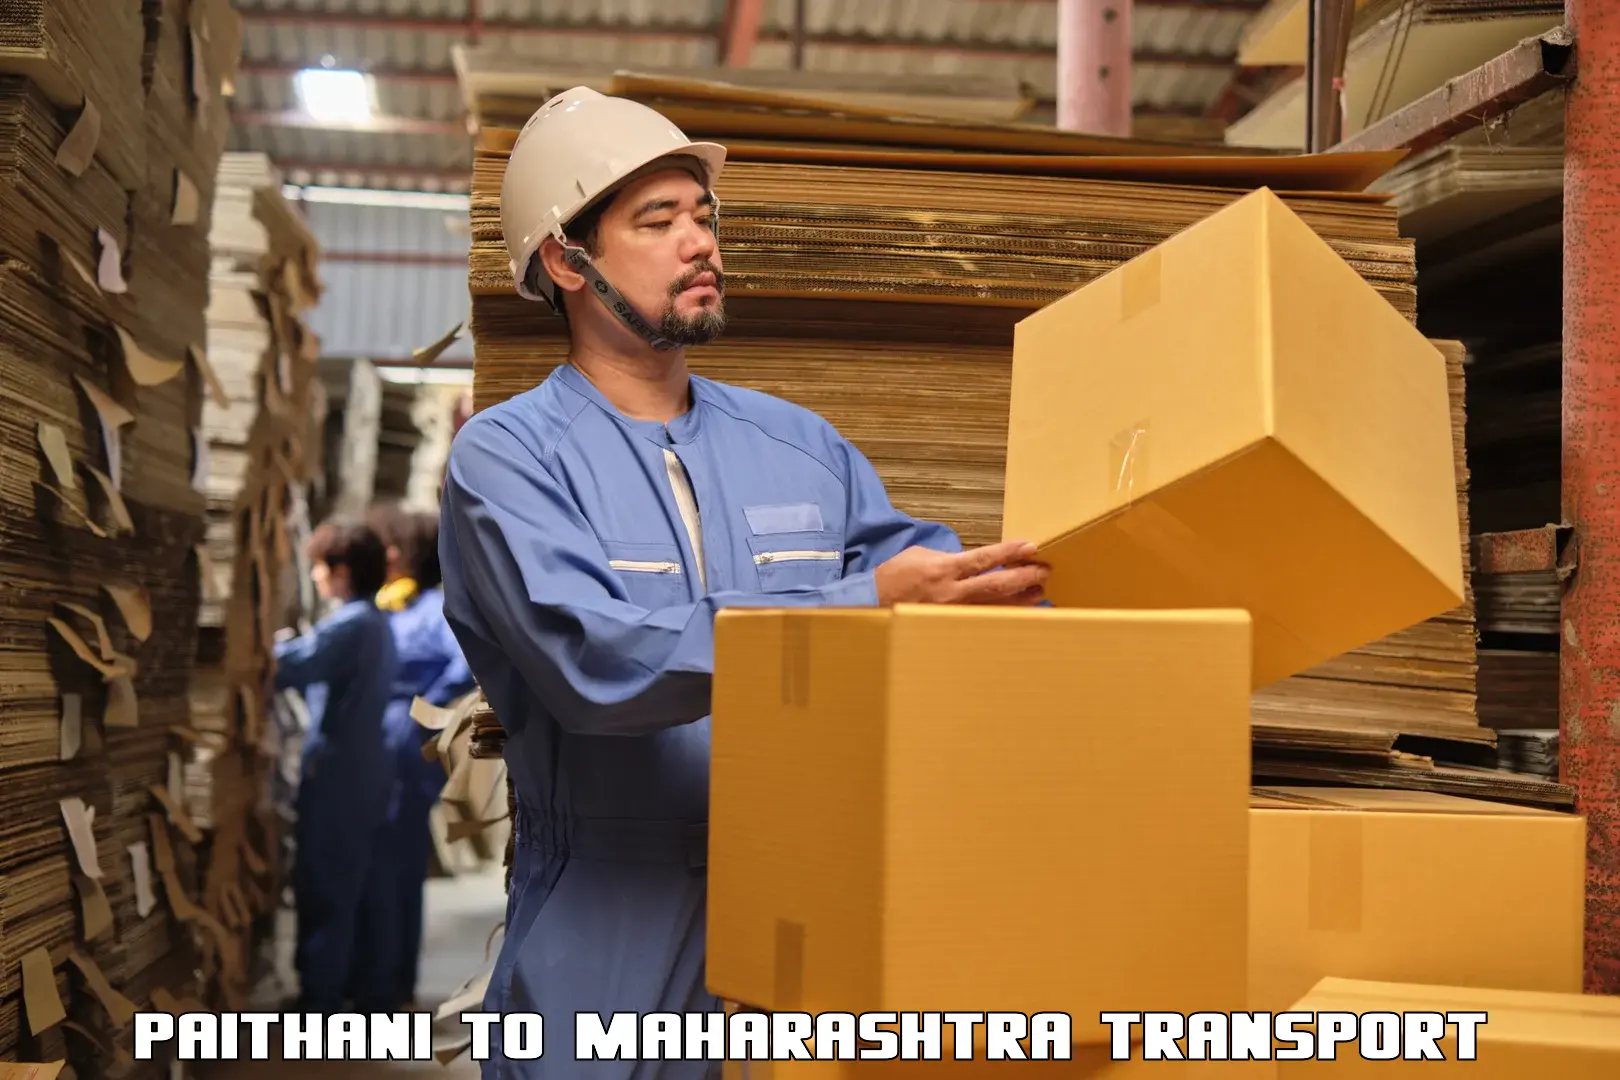 Furniture transport service Paithani to Thane